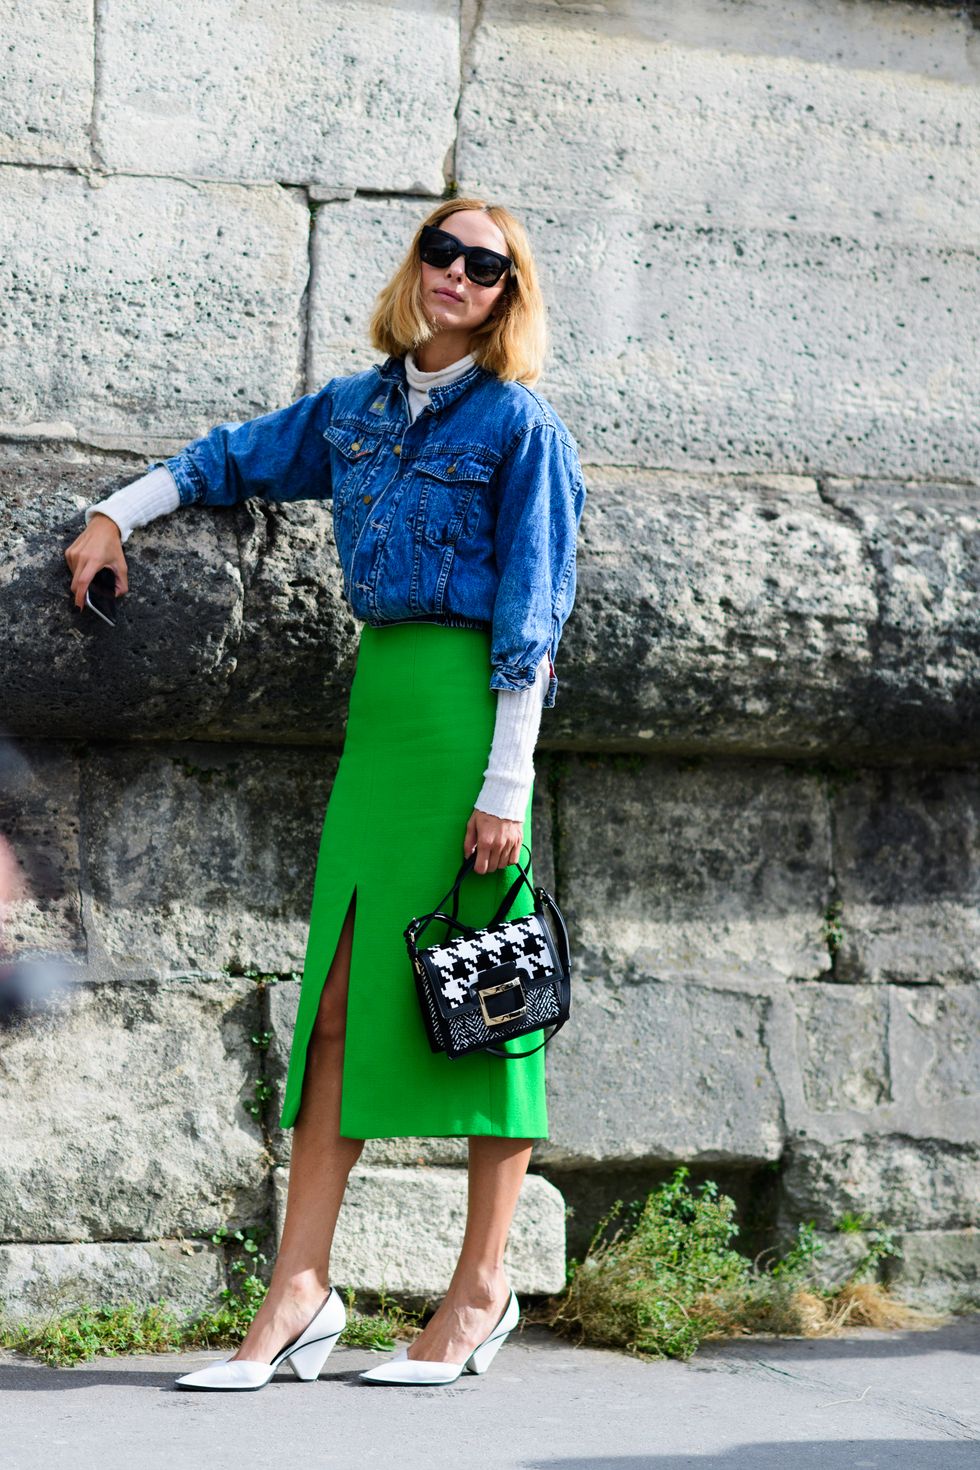 10 Midi Skirt Styles for Spring 2016 - Ways to Wear a Midi Skirt